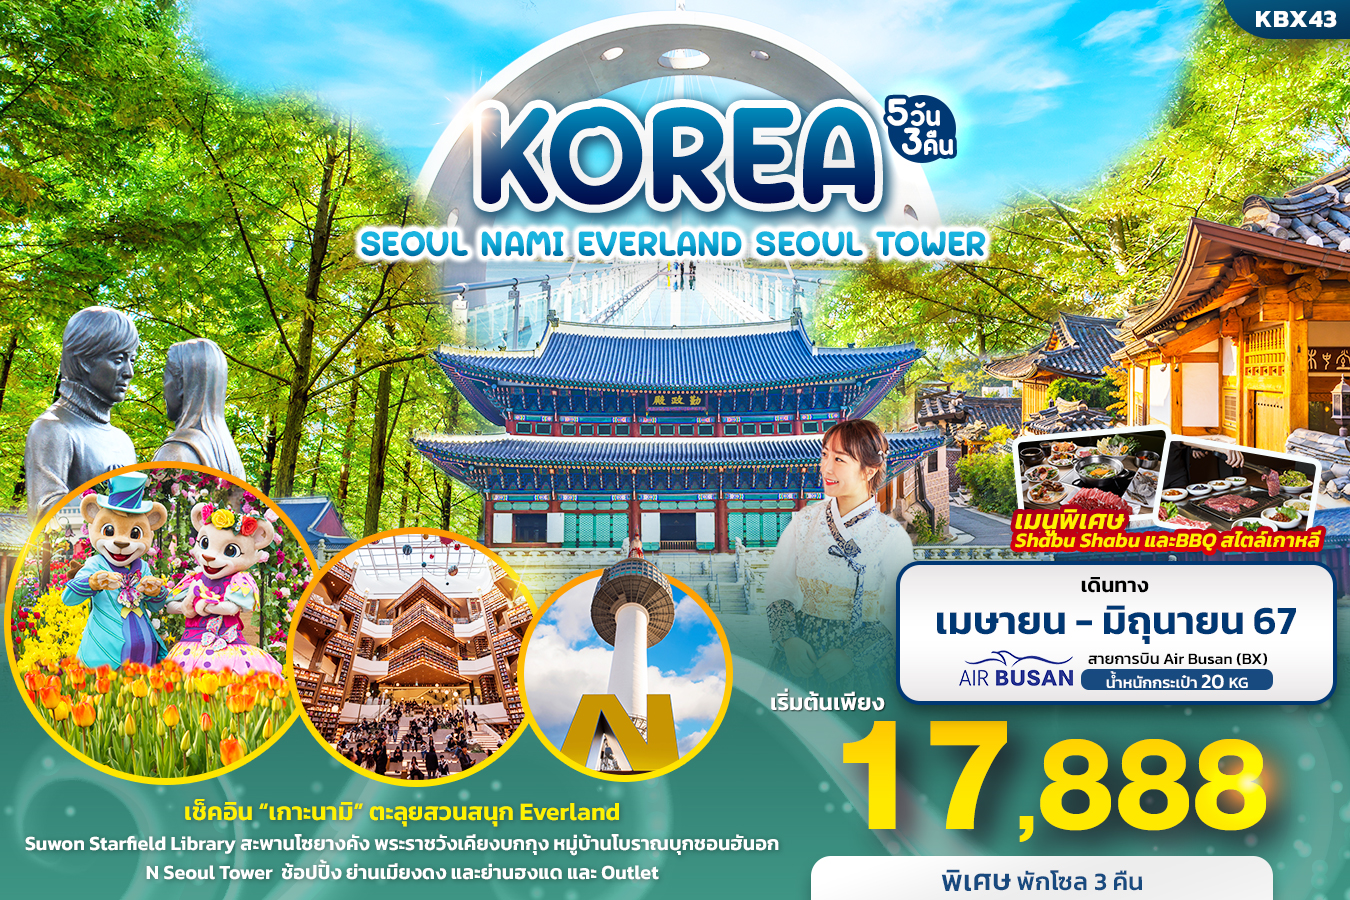 KOREA SEOUL NAMI EVERLAND SEOUL TOWER 5วัน3คืน โดยสายการบิน Air Busan (BX)